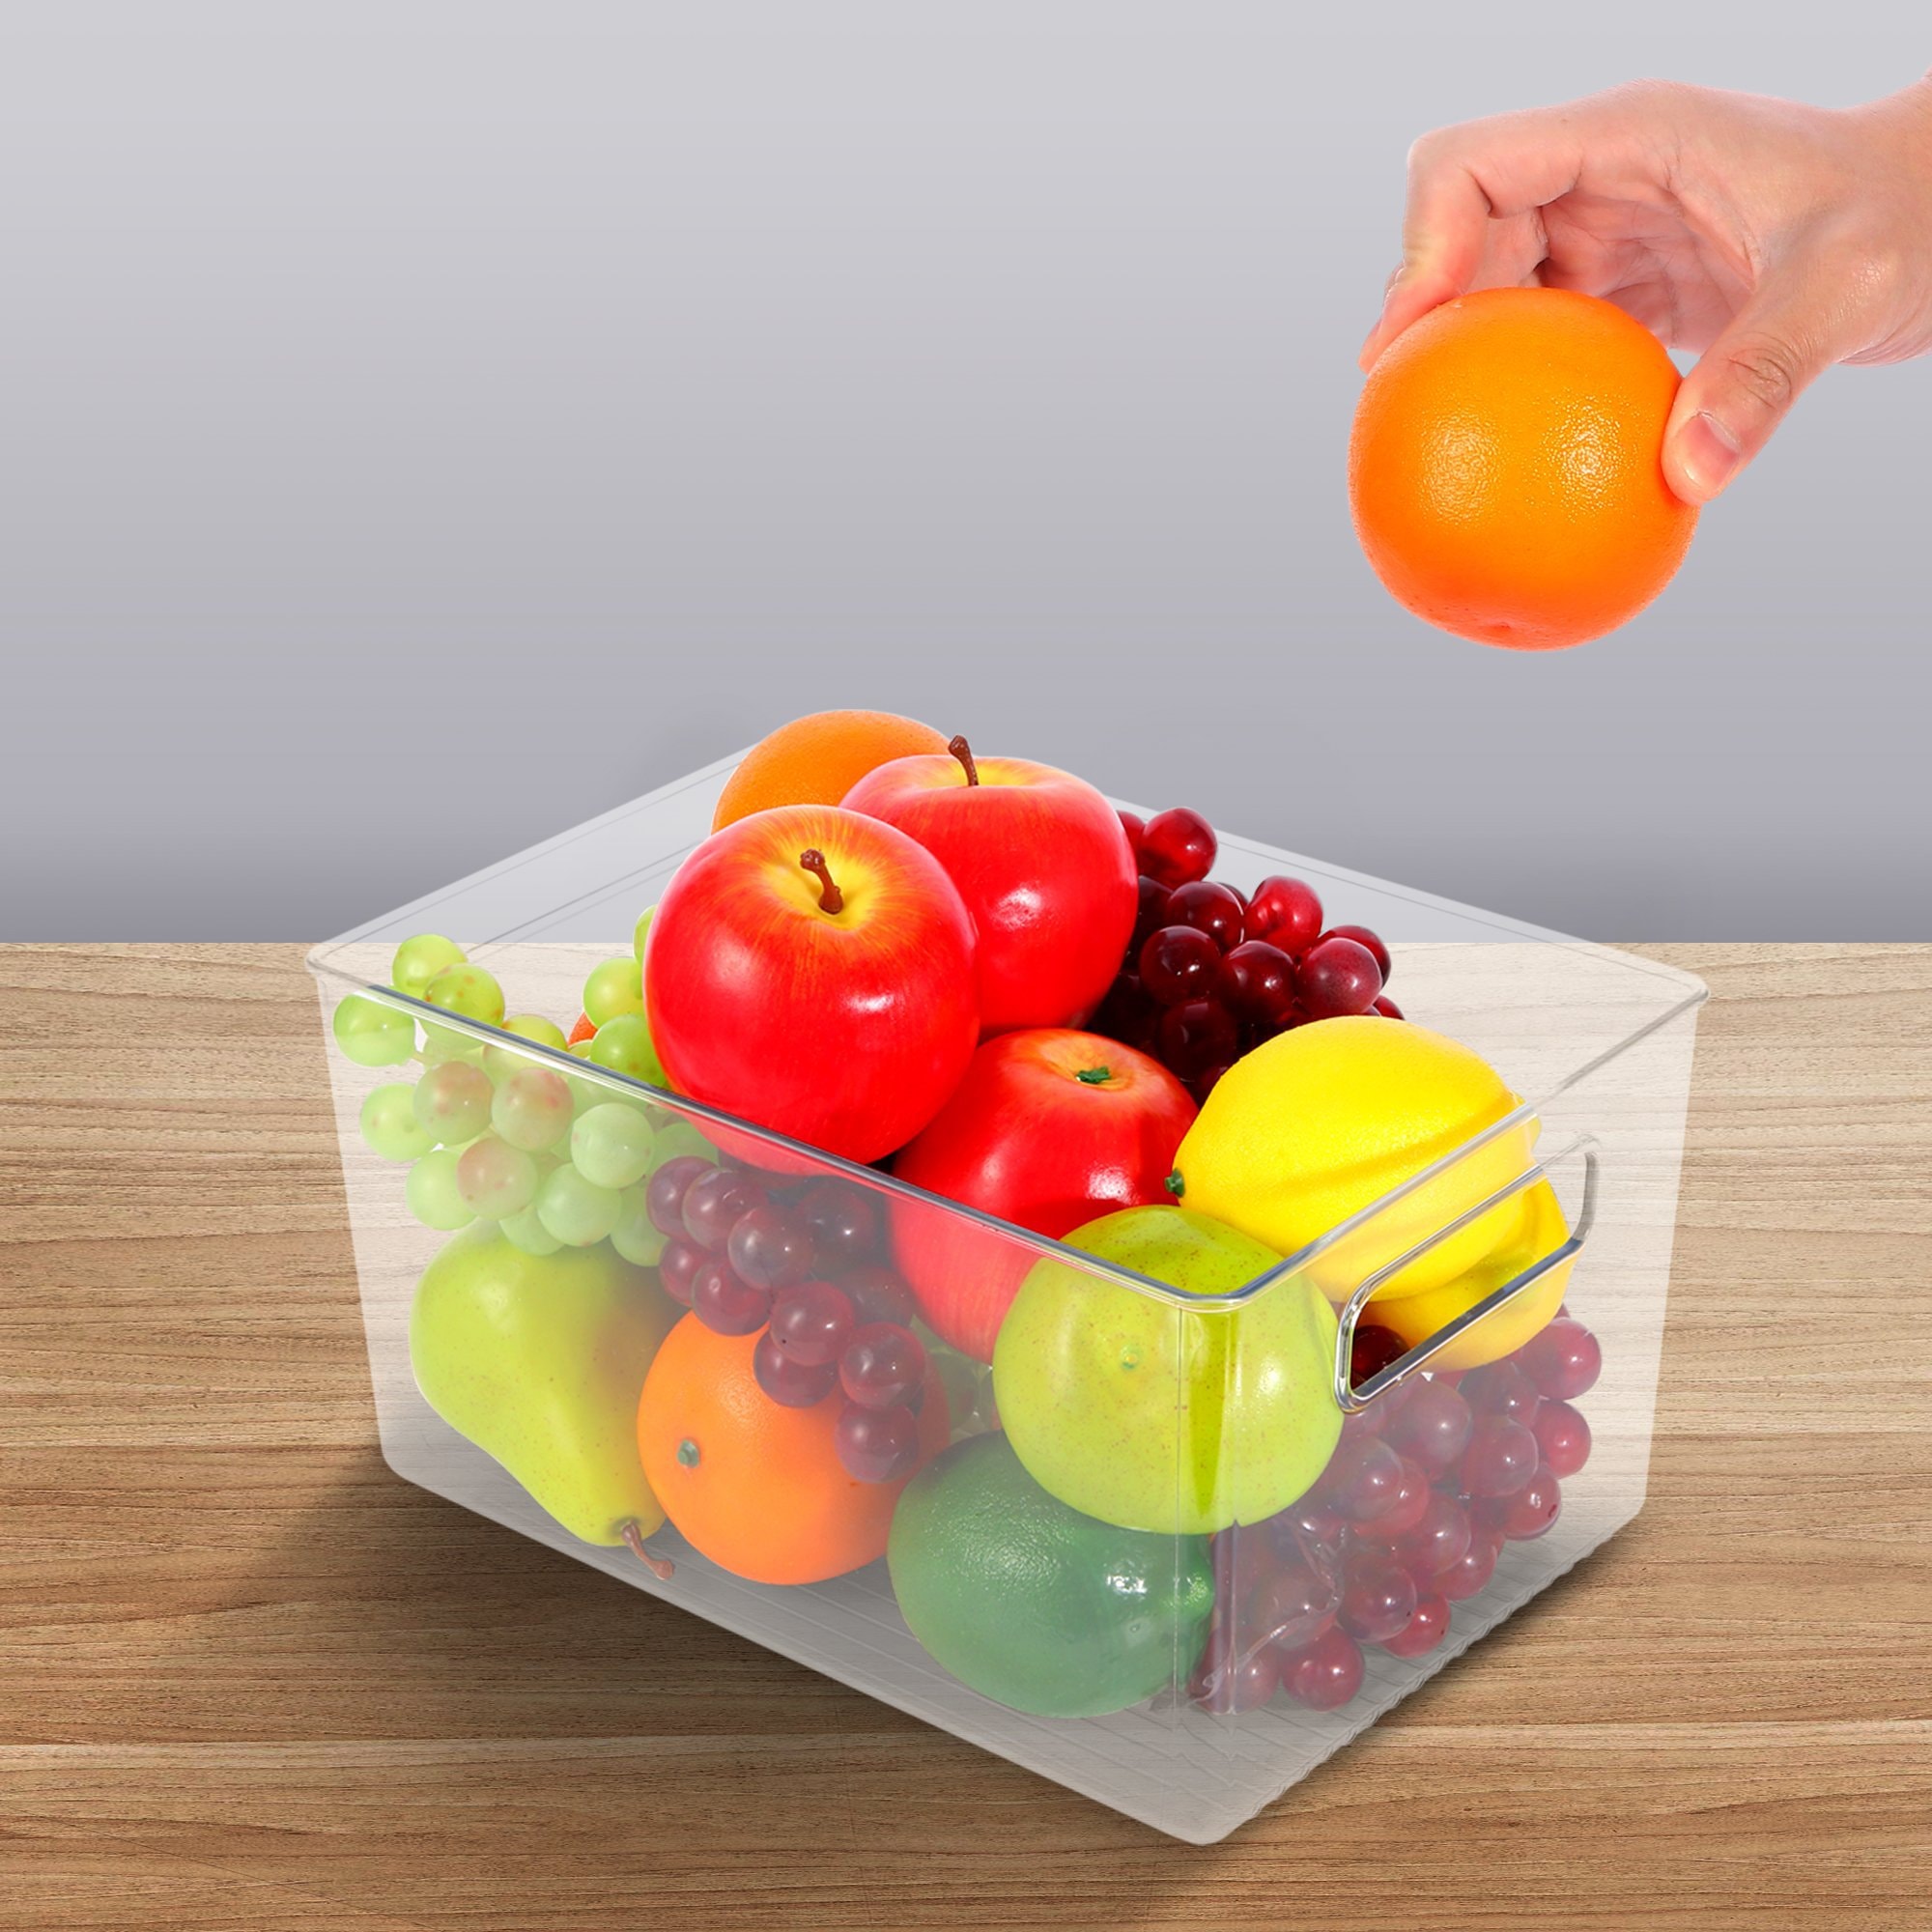 ROSELIFE 蔬菜水果分类厨房冰箱收纳盒 11.4"x8.2"x6.0"